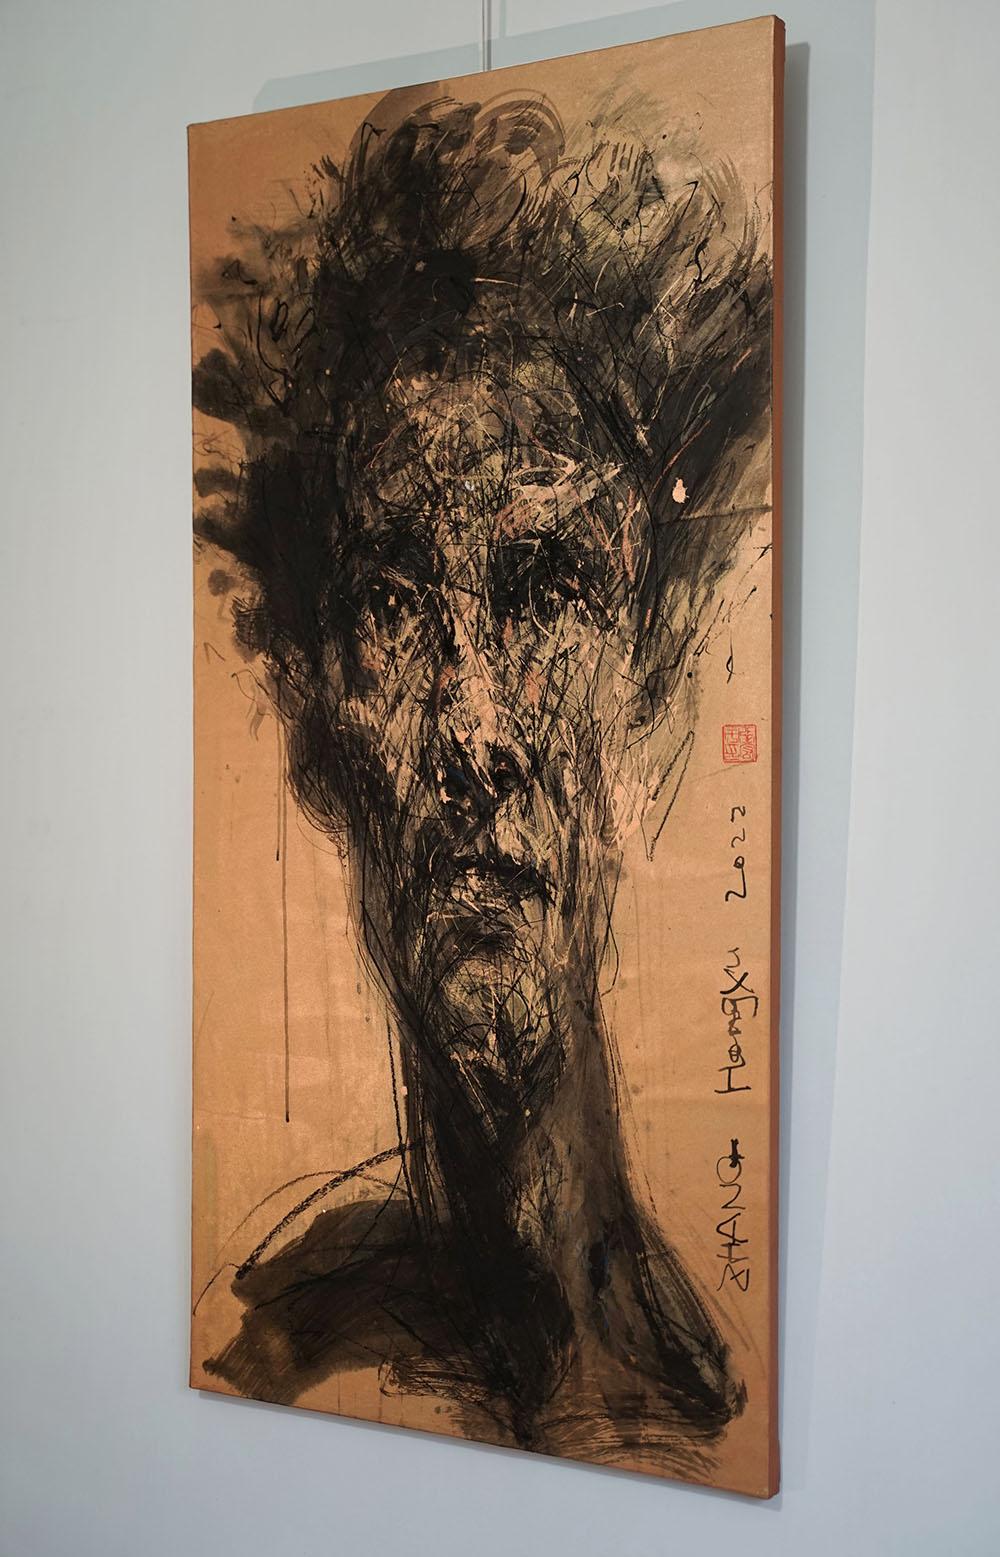 hongyu zhang artist